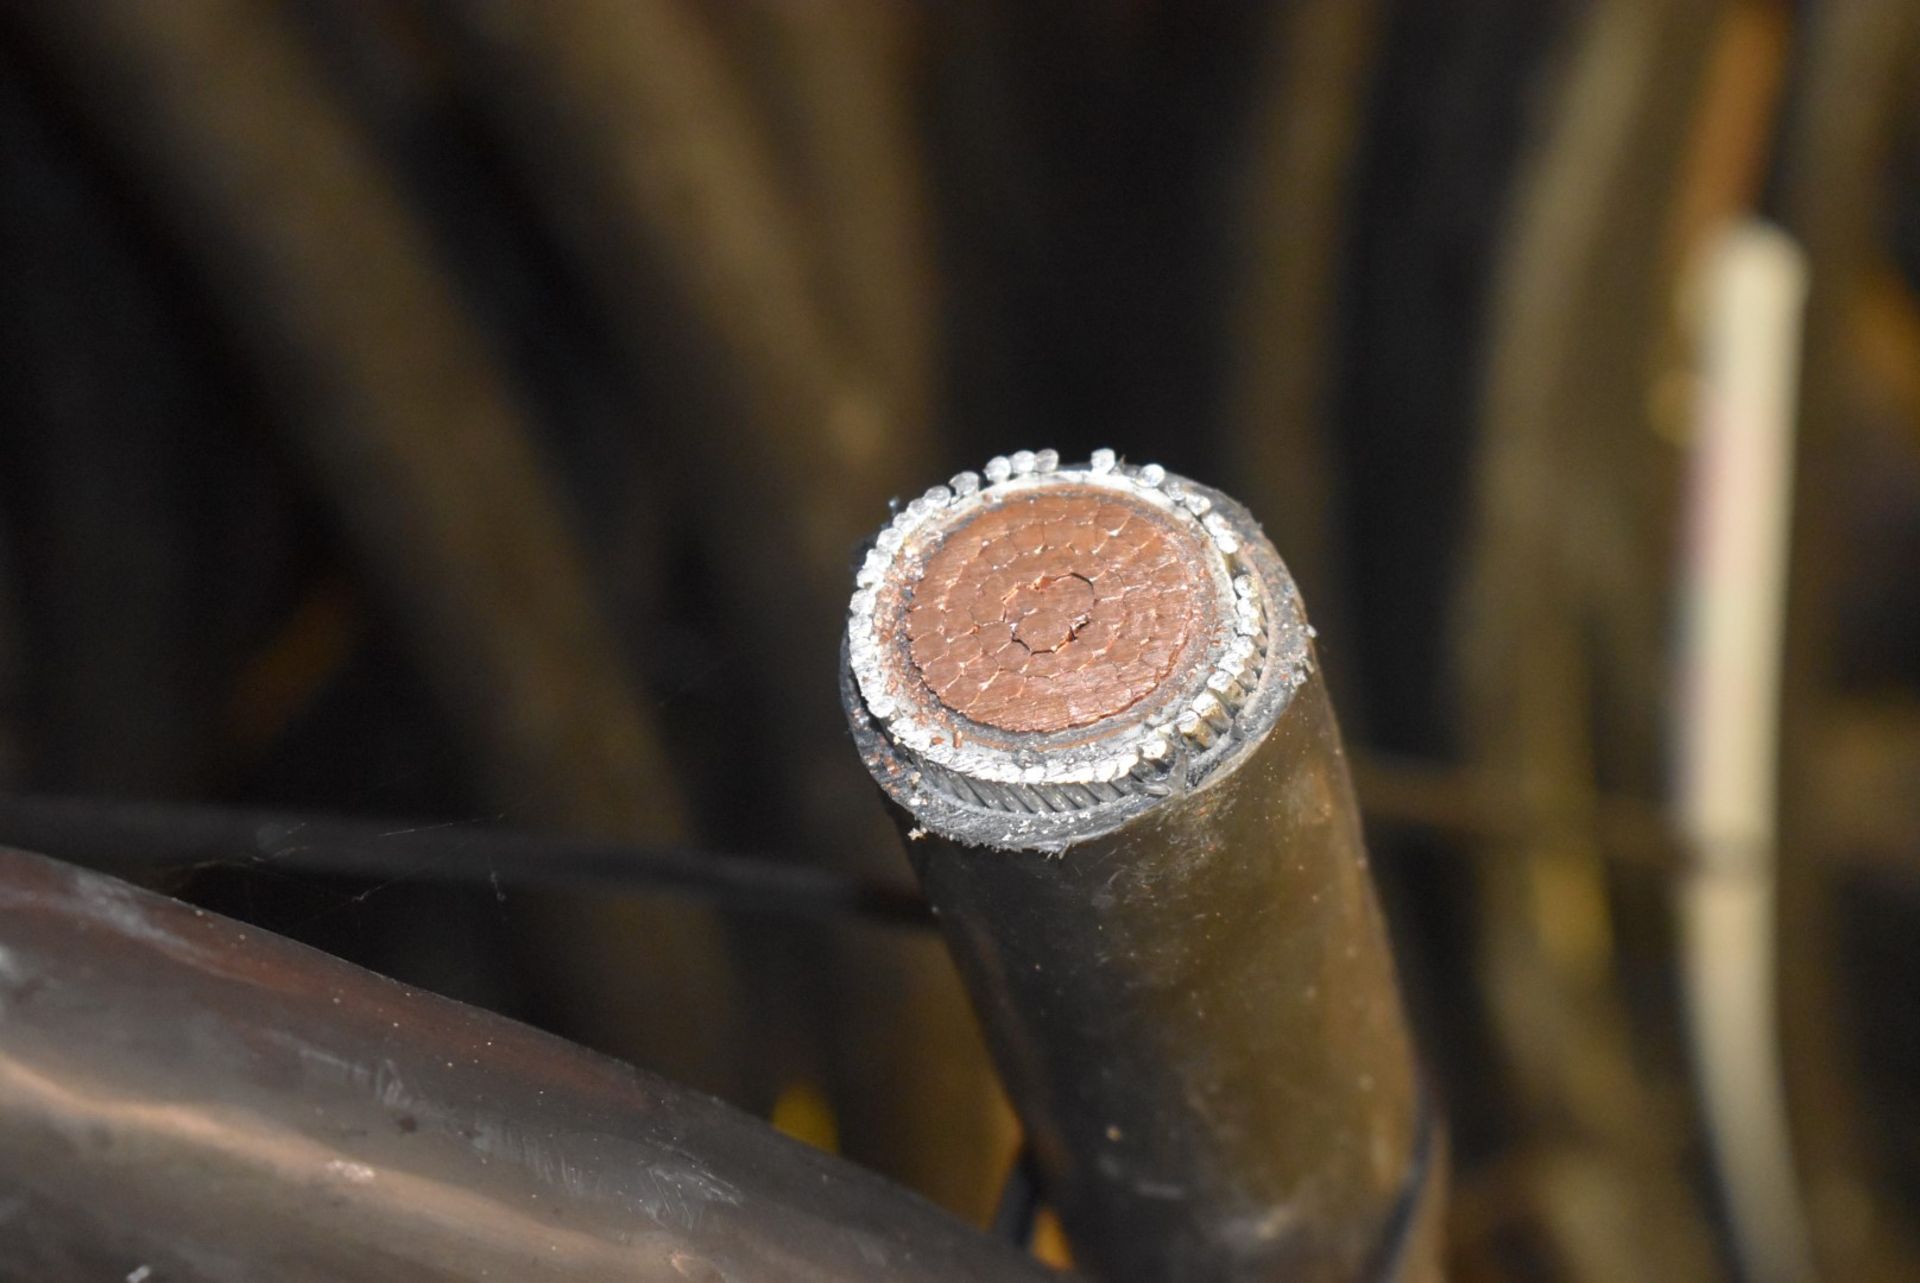 6 x Bundles of Thick Copper Cable - Approx 100cm Diameter Bundles - Image 3 of 5